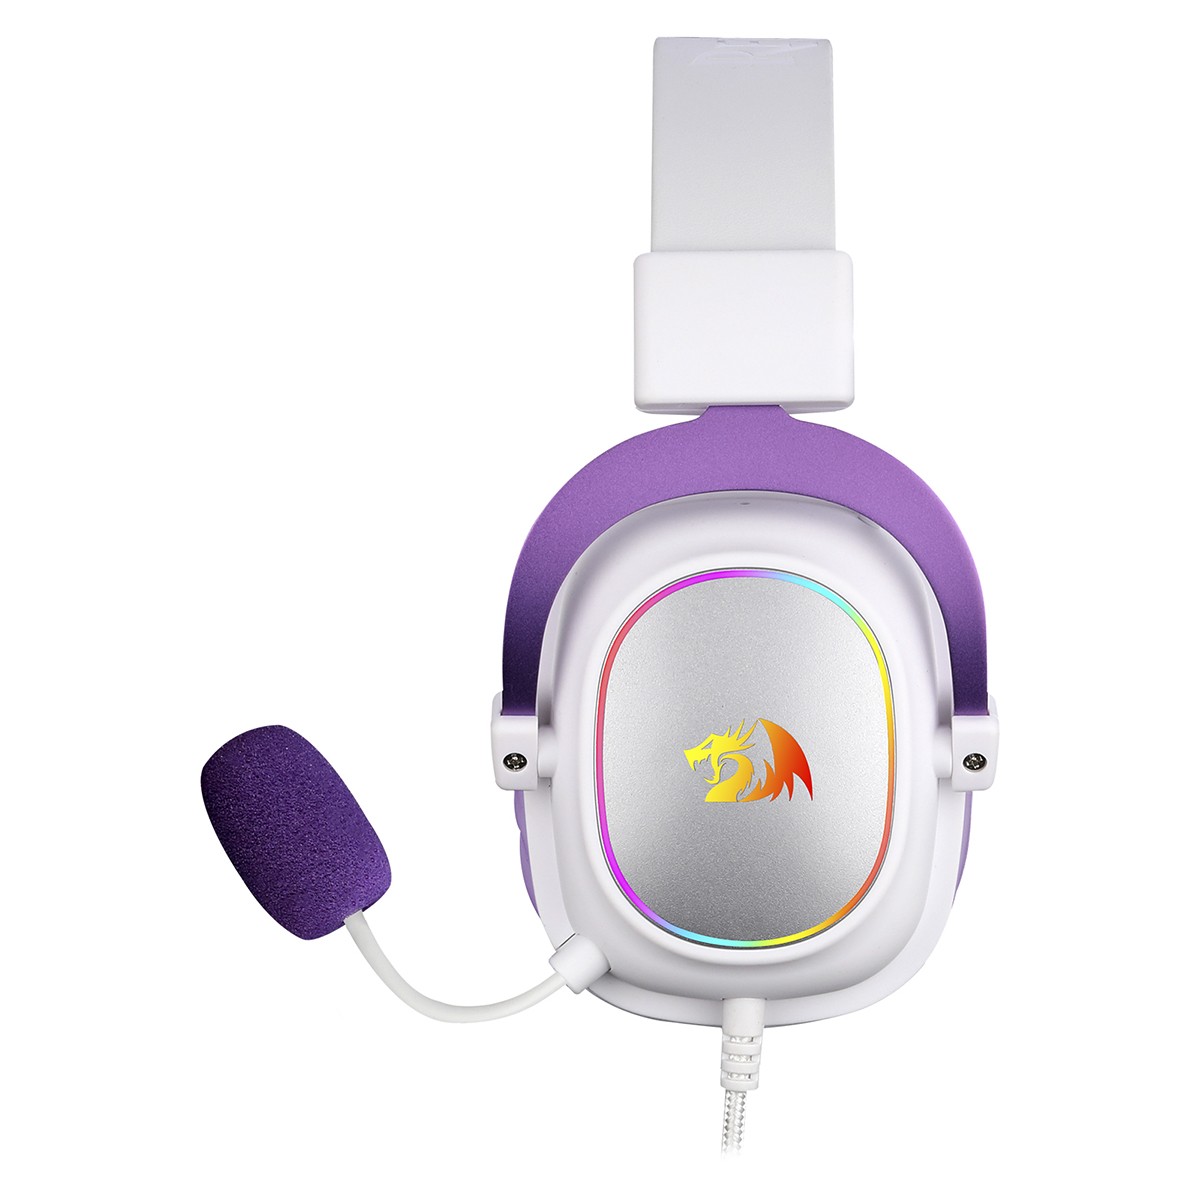 Headset Gamer Redragon Zeus X, USB, Surround 7.1, RGB, White/Purple, H510WP-RGB